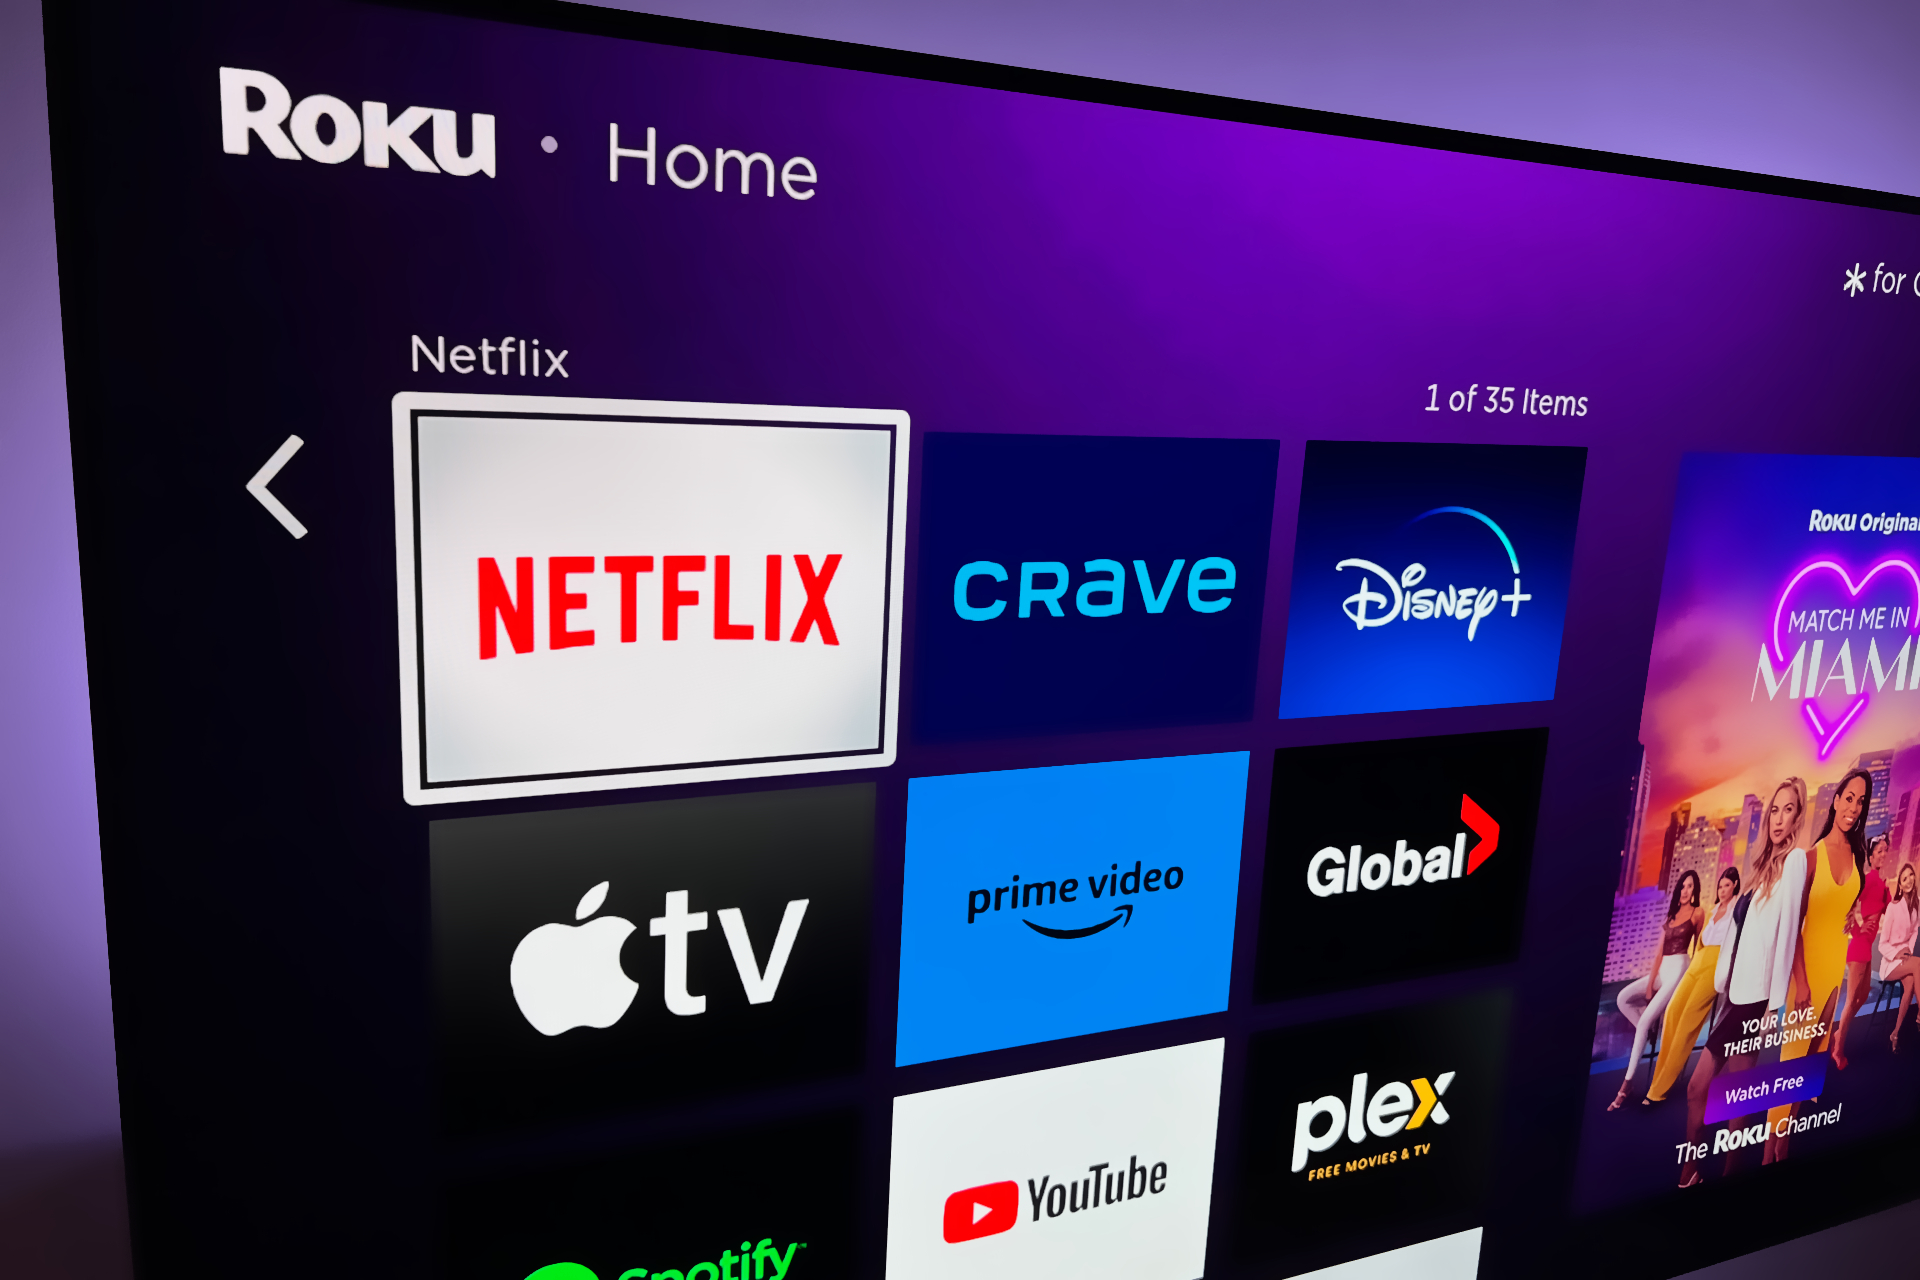 Roku Netflix Player Set-top Box Review